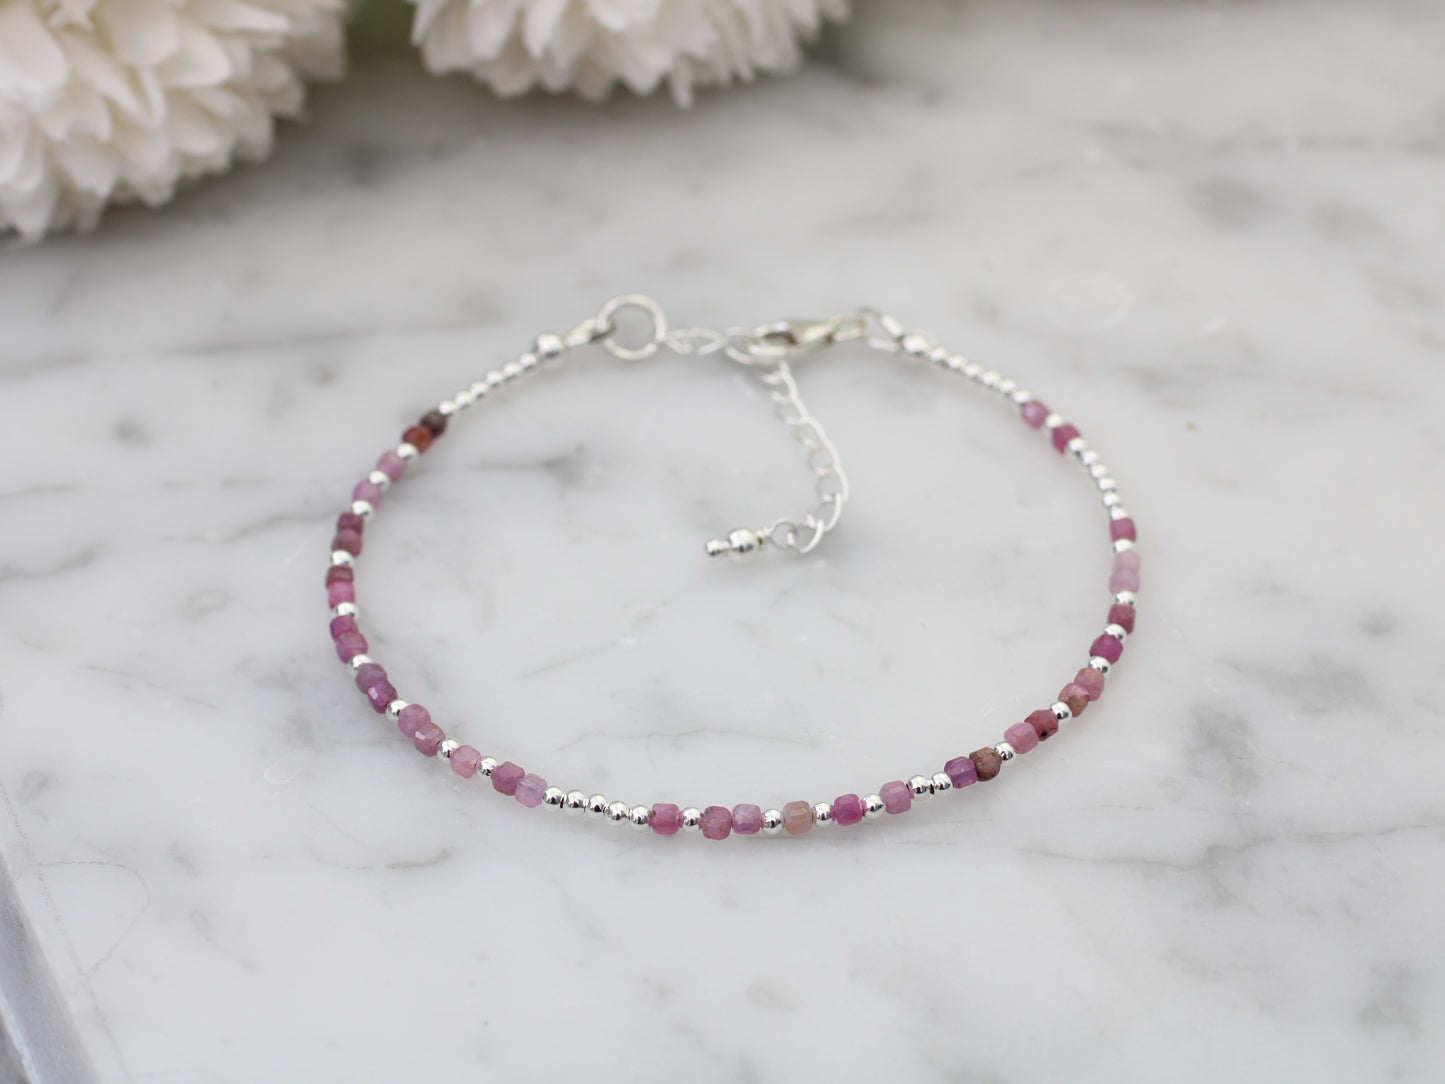 I love you morse code bracelet with ruby gemstones.